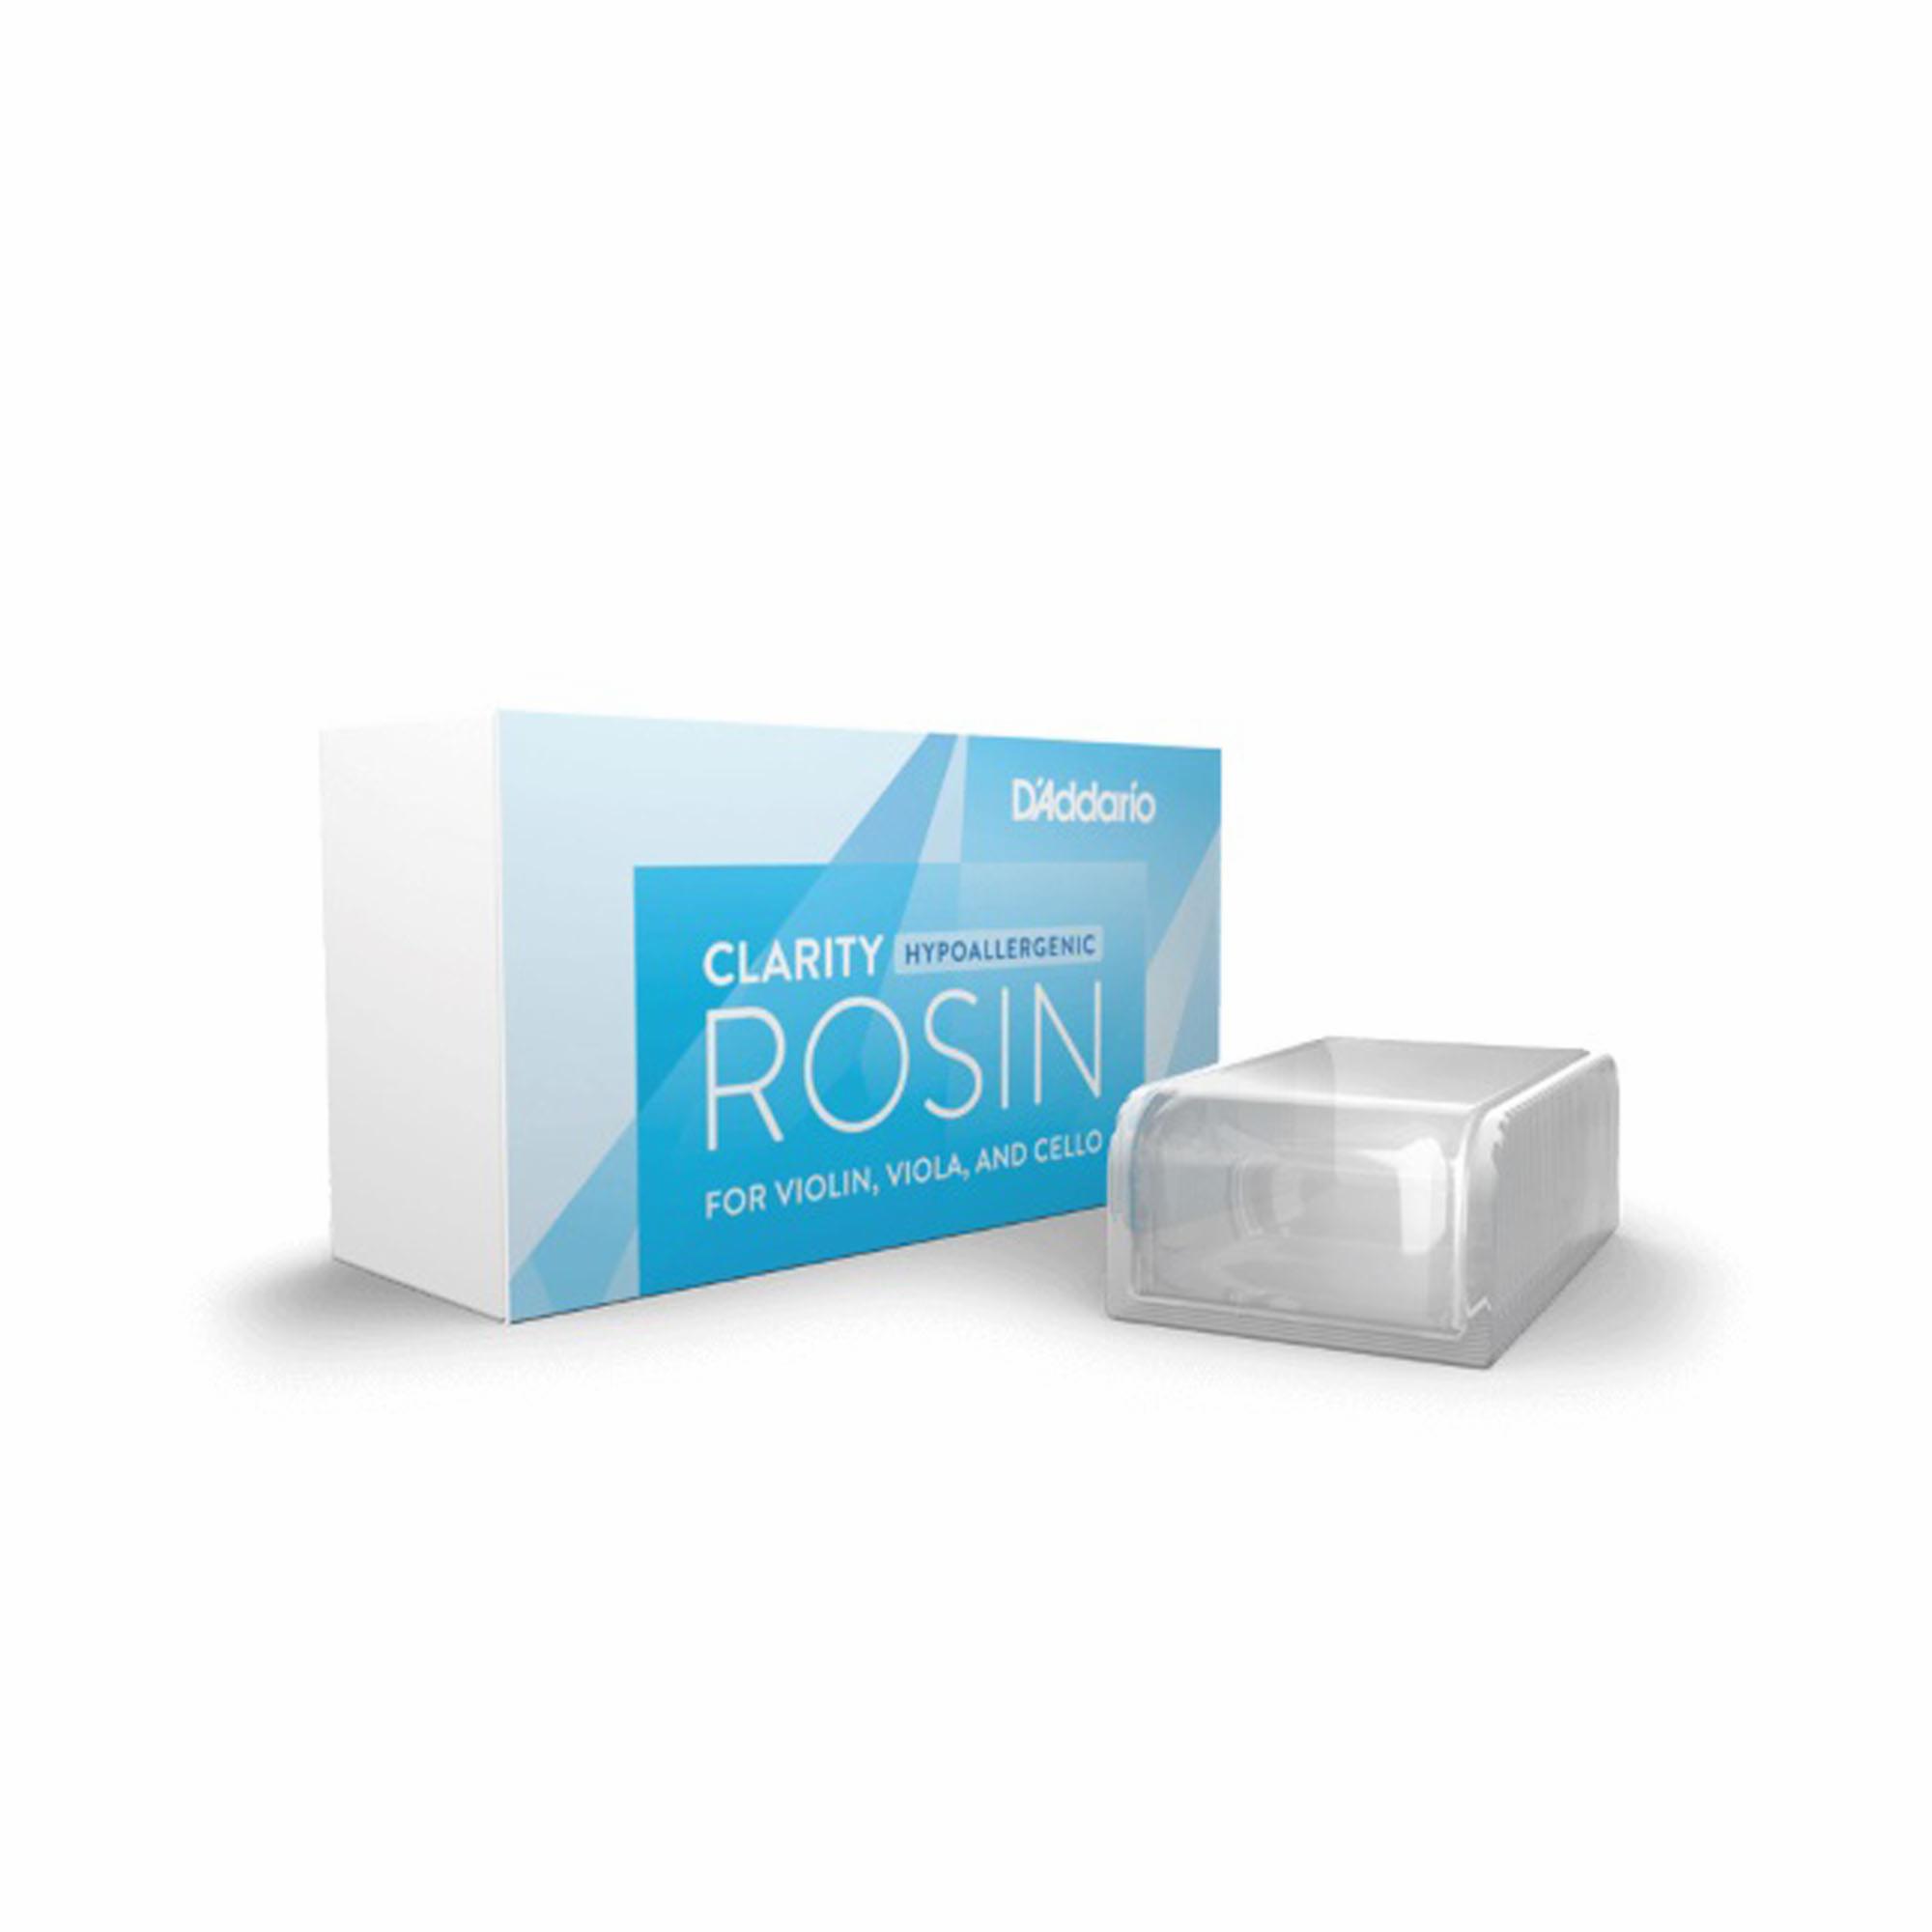 Clarity Hypoallergenic Rosin